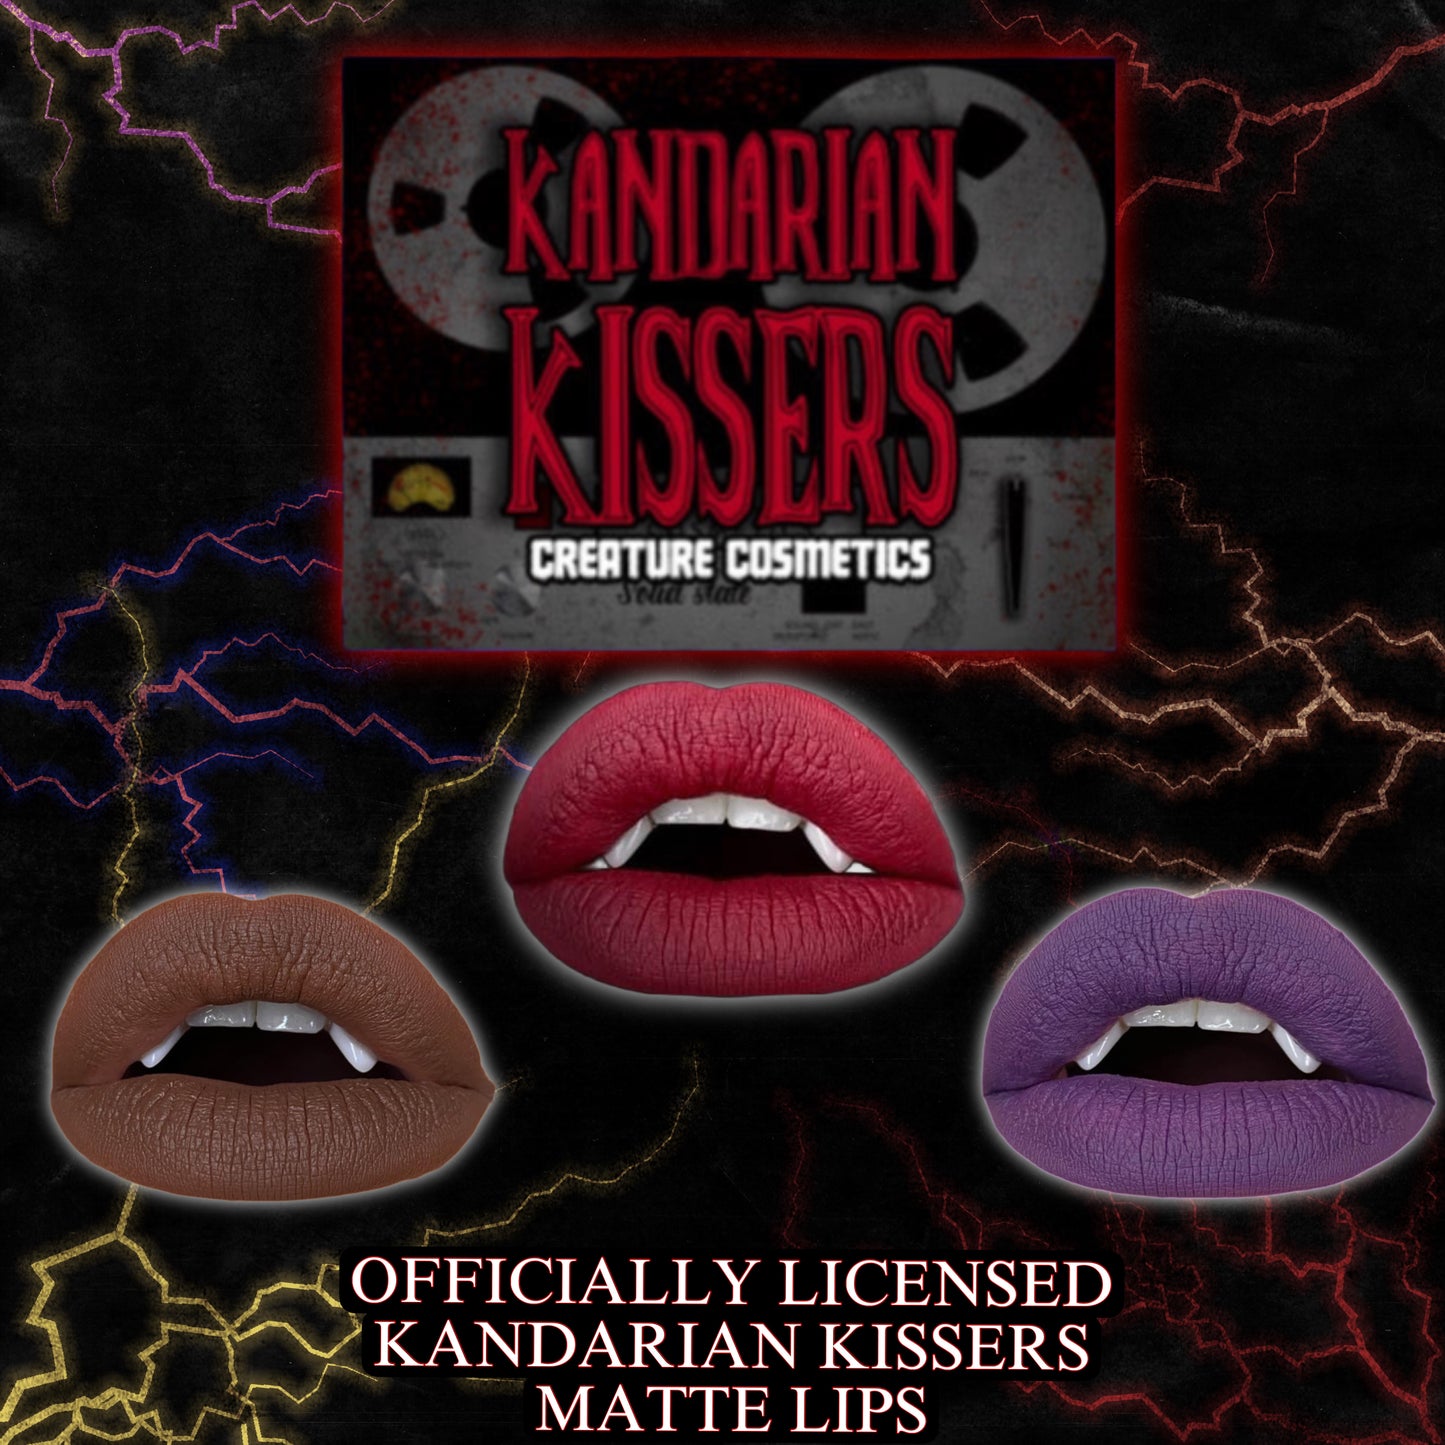 KANDARIAN KISSERS LIPSTICKS